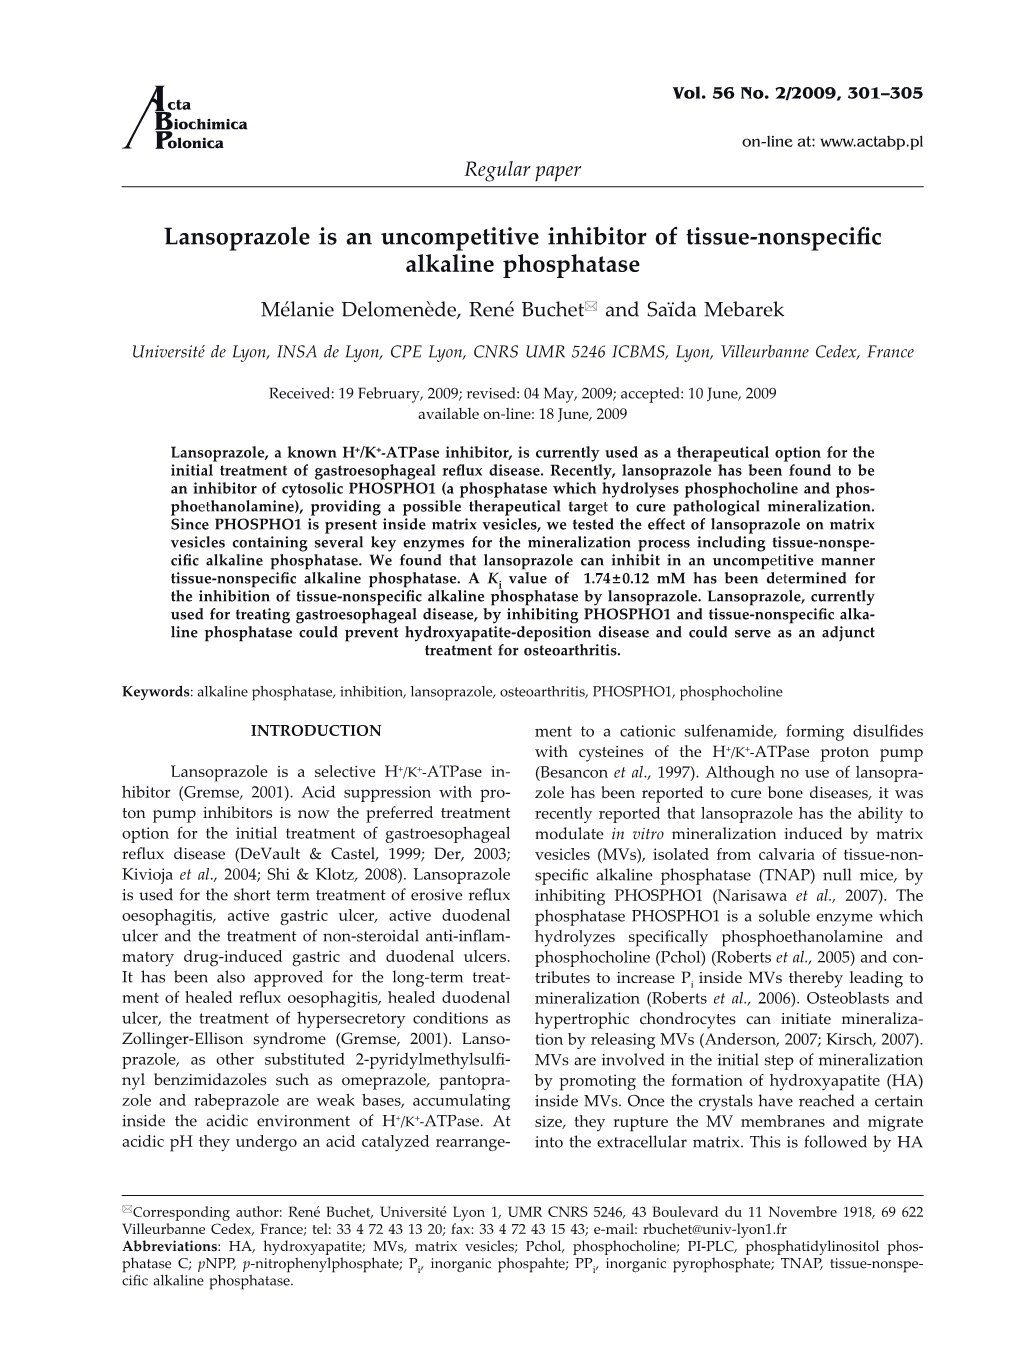 Lansoprazole Is an Uncompetitive Inhibitor of Tissue-Nonspecific Alkaline Phosphatase